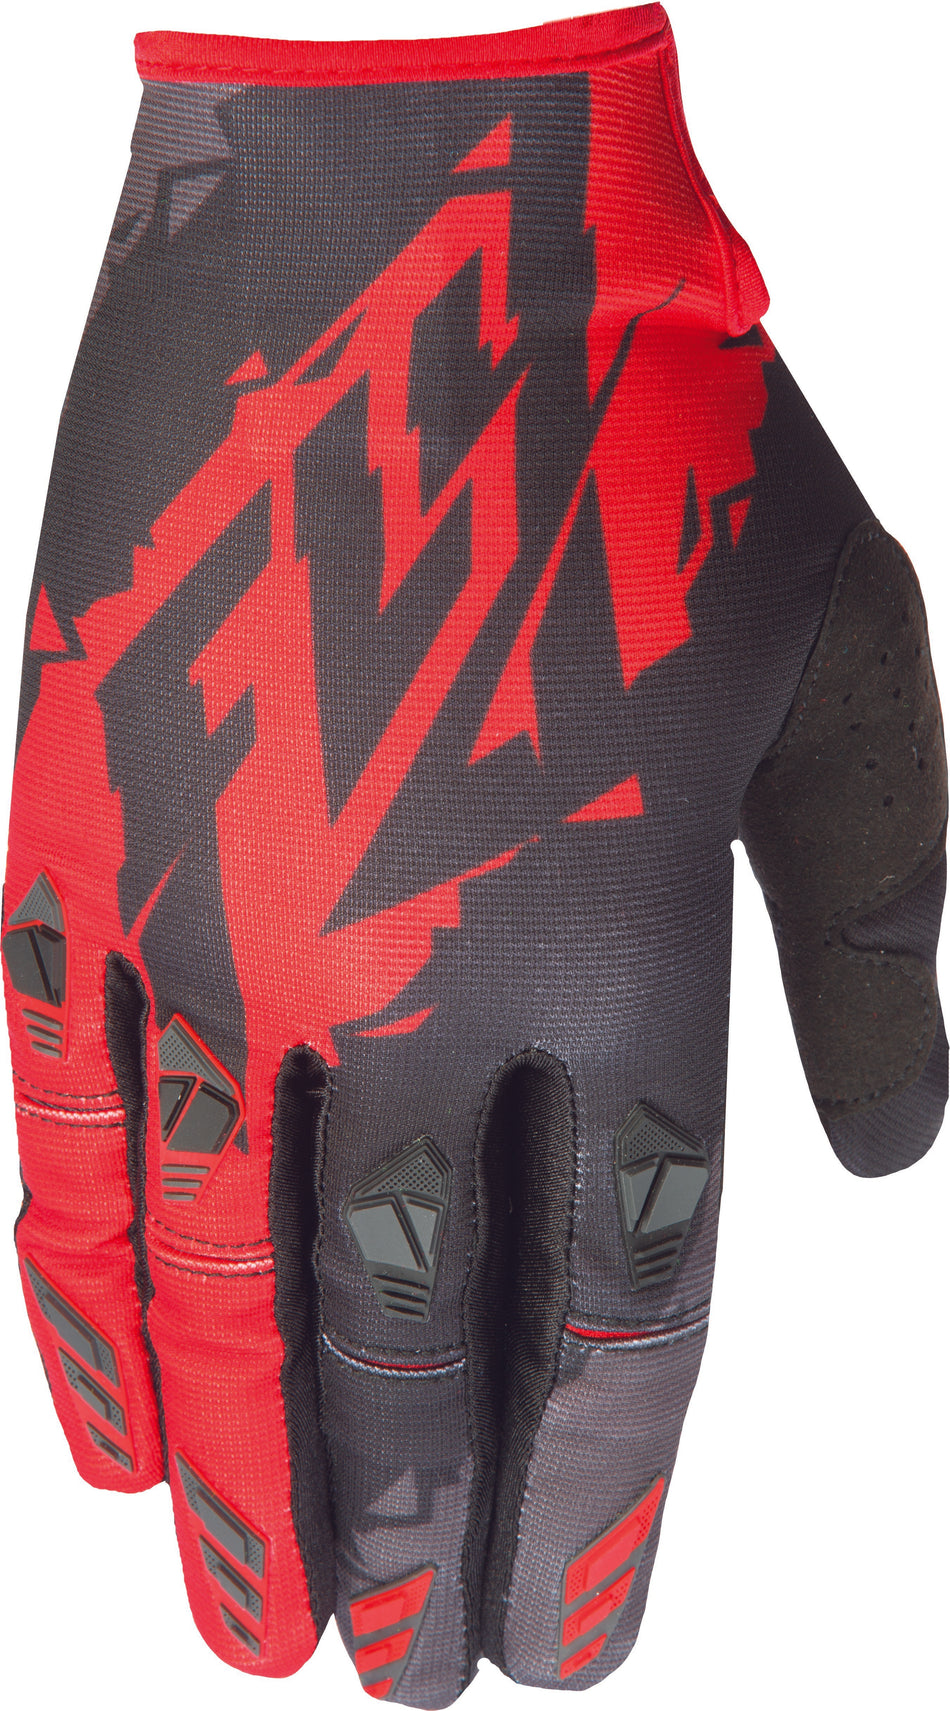 FLY RACING Kinetic Glove Black/Red Sz 13 3x 370-41213